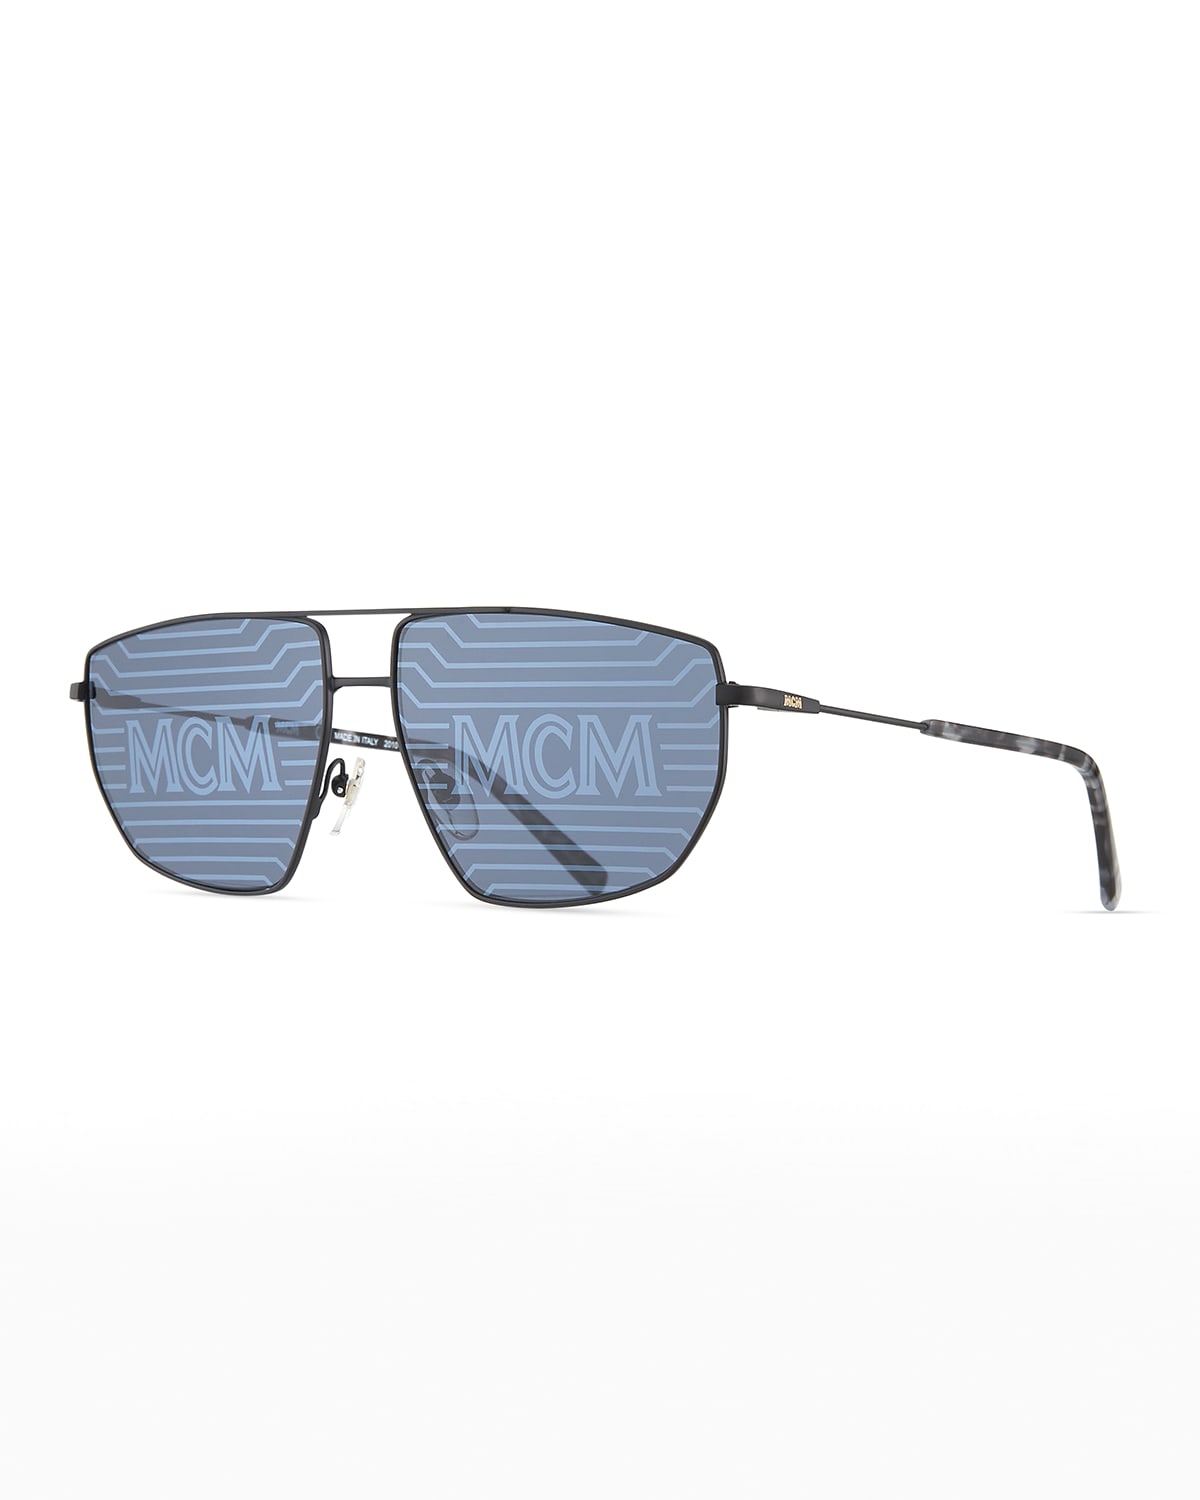 Men's Holographic Metal Aviator Sunglasses